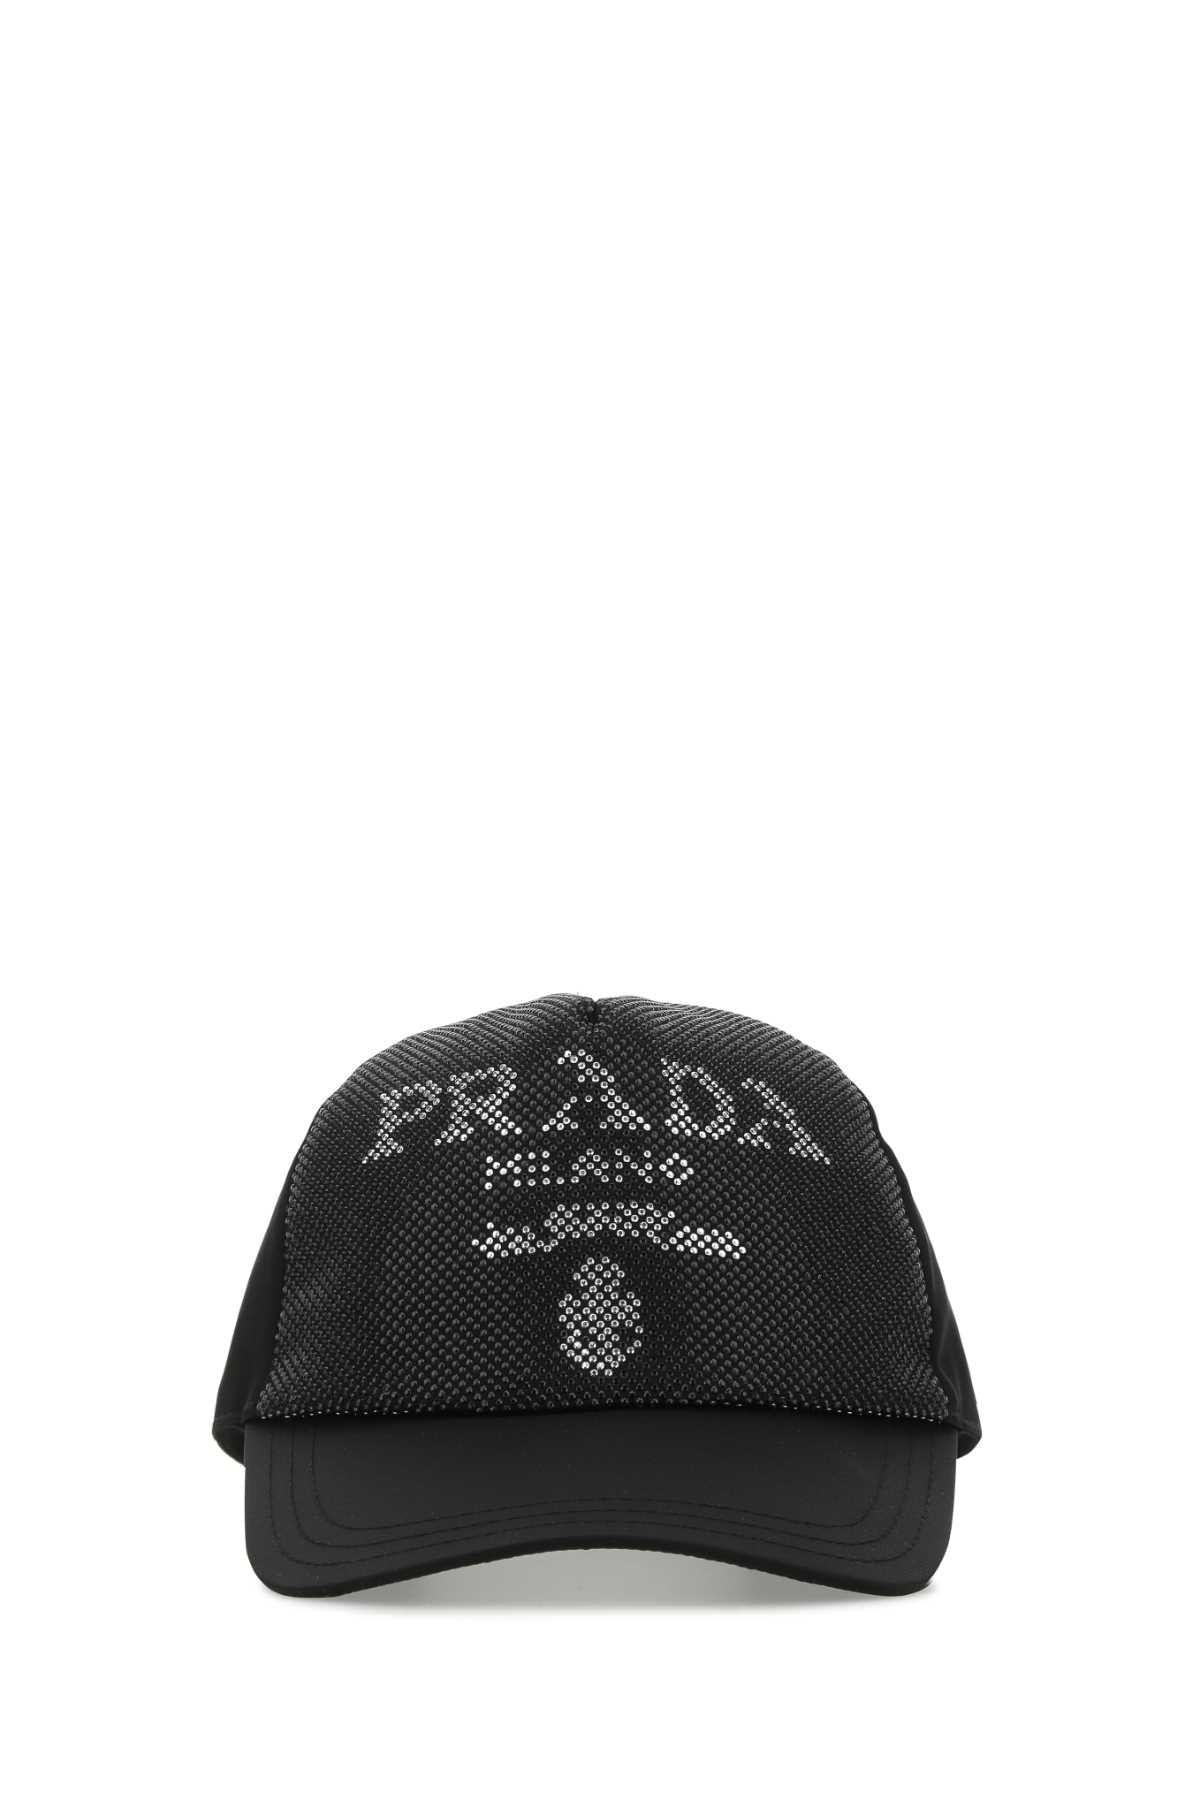 Prada Logo Detailed Baseball Cap